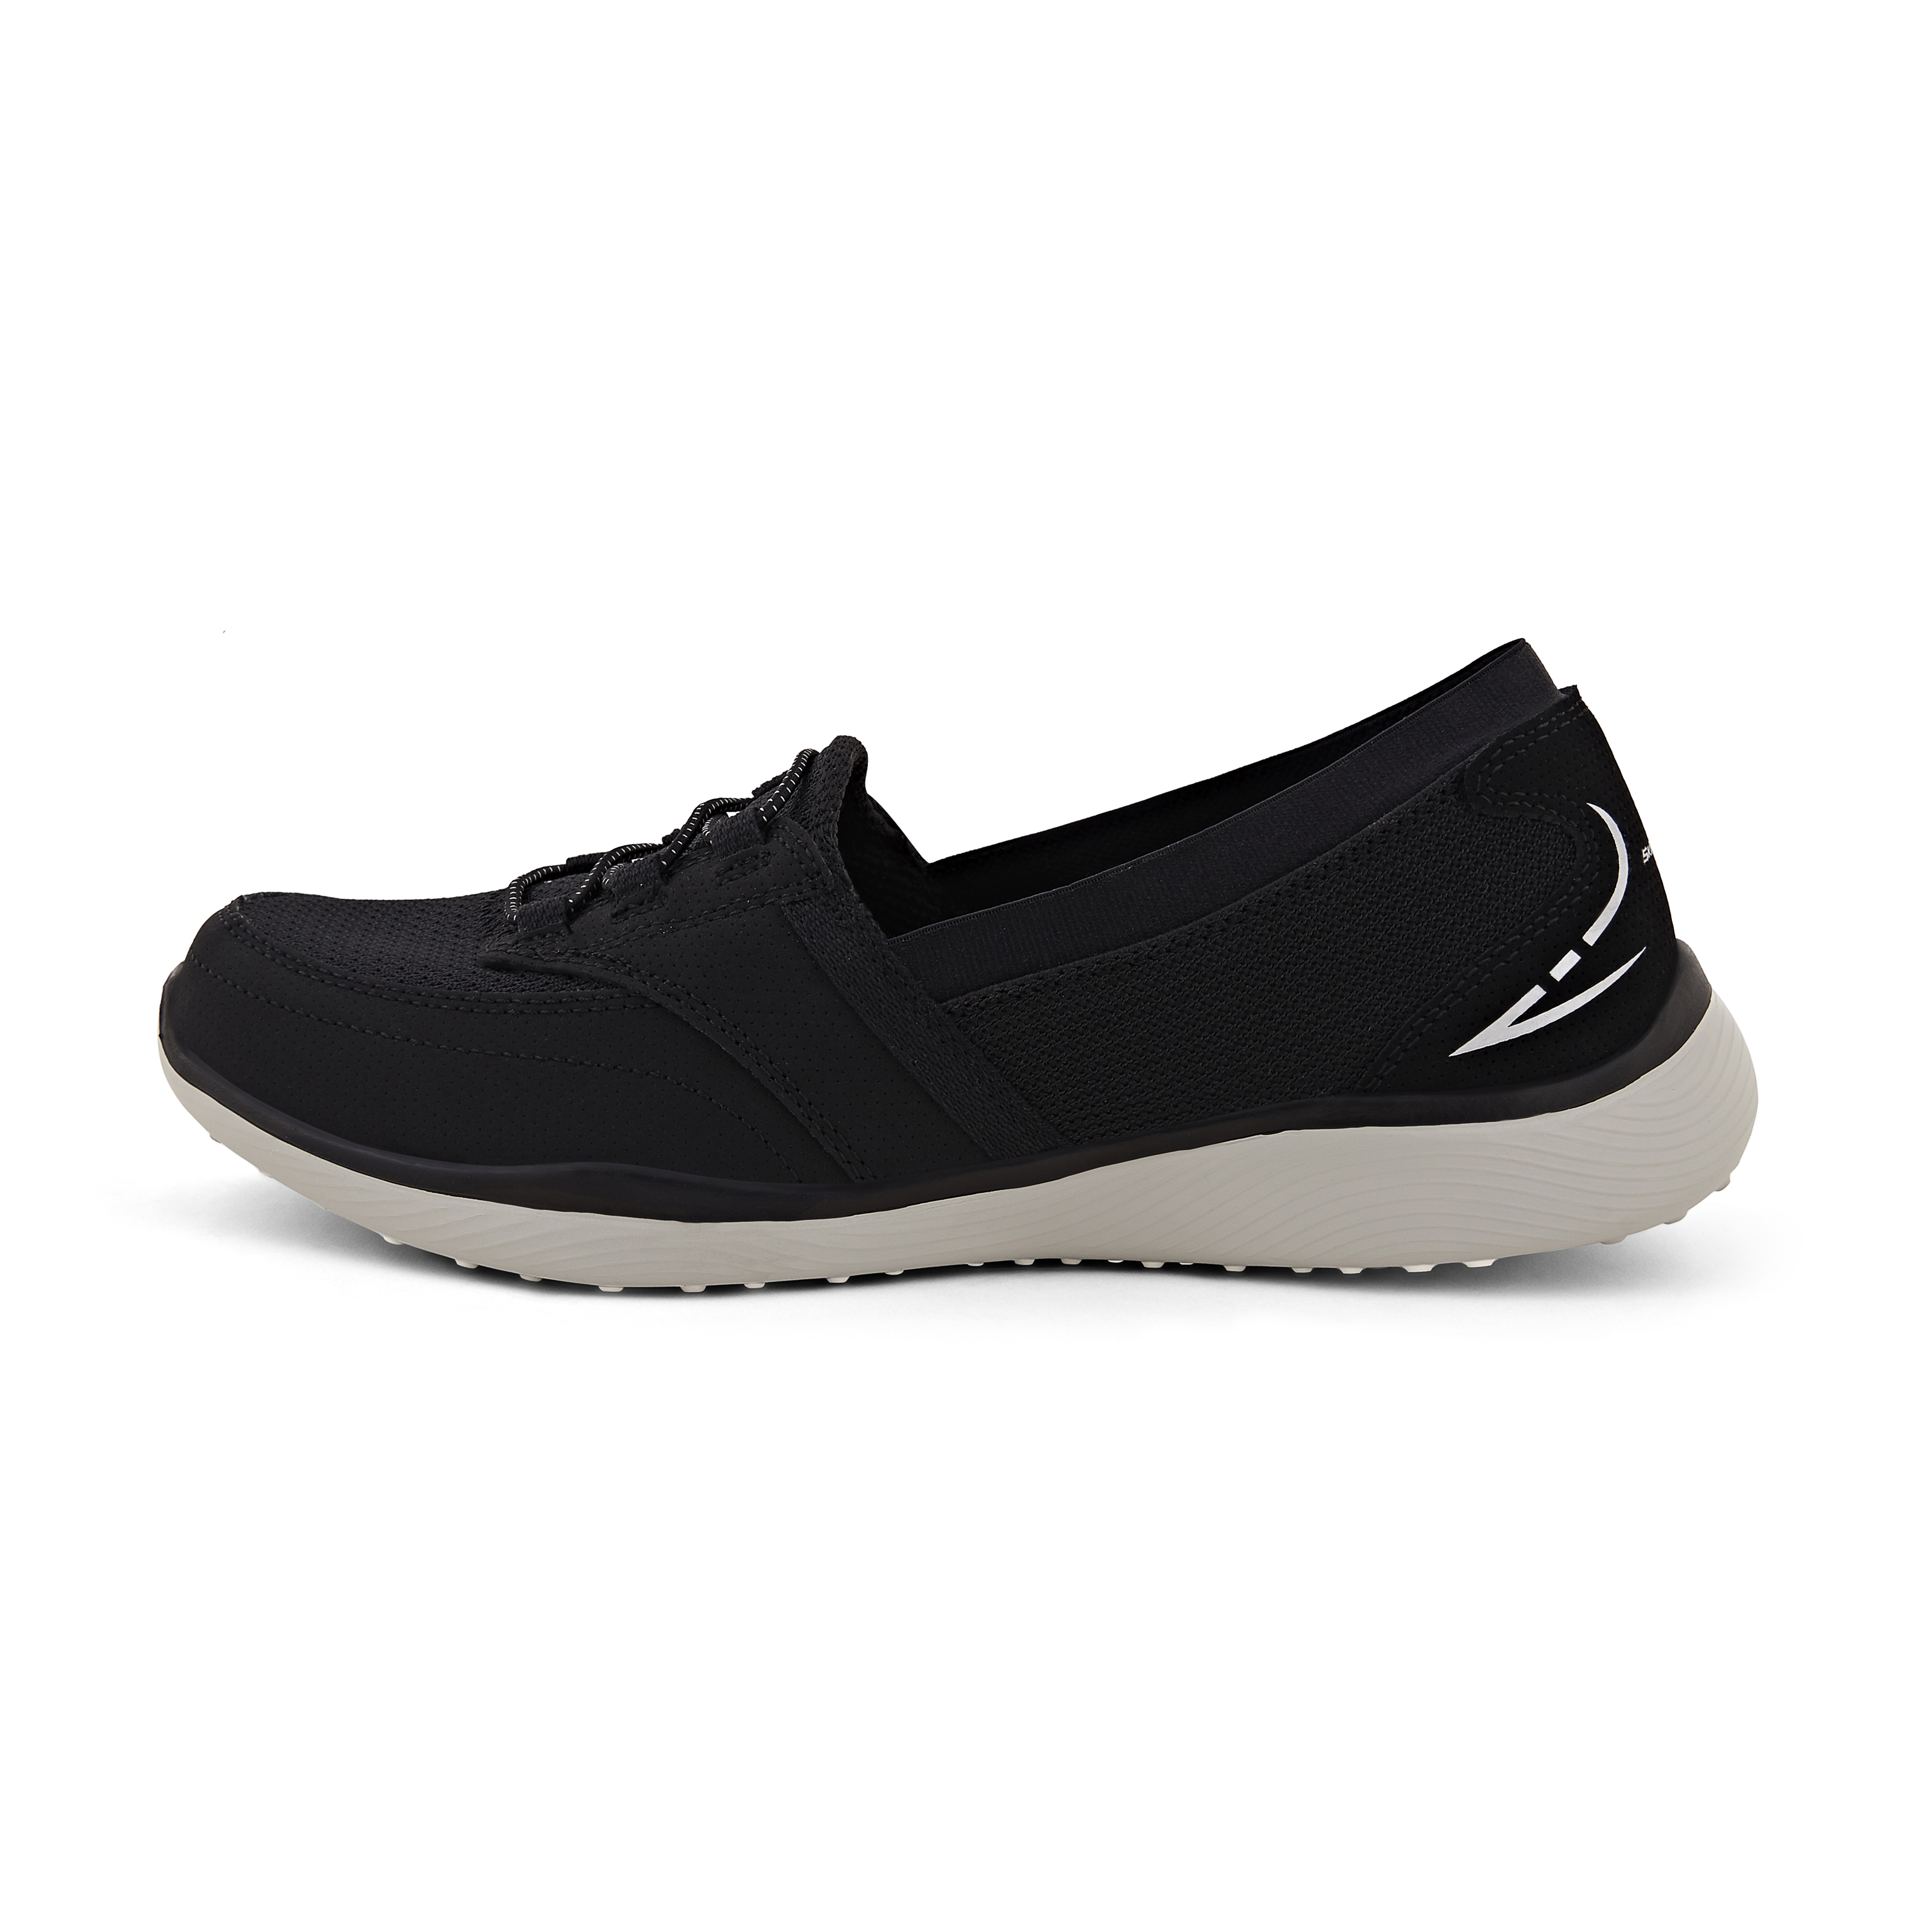 MICROBURST 2.0 - SAVVY POISE, BLACK/WHITE Footwear Left View